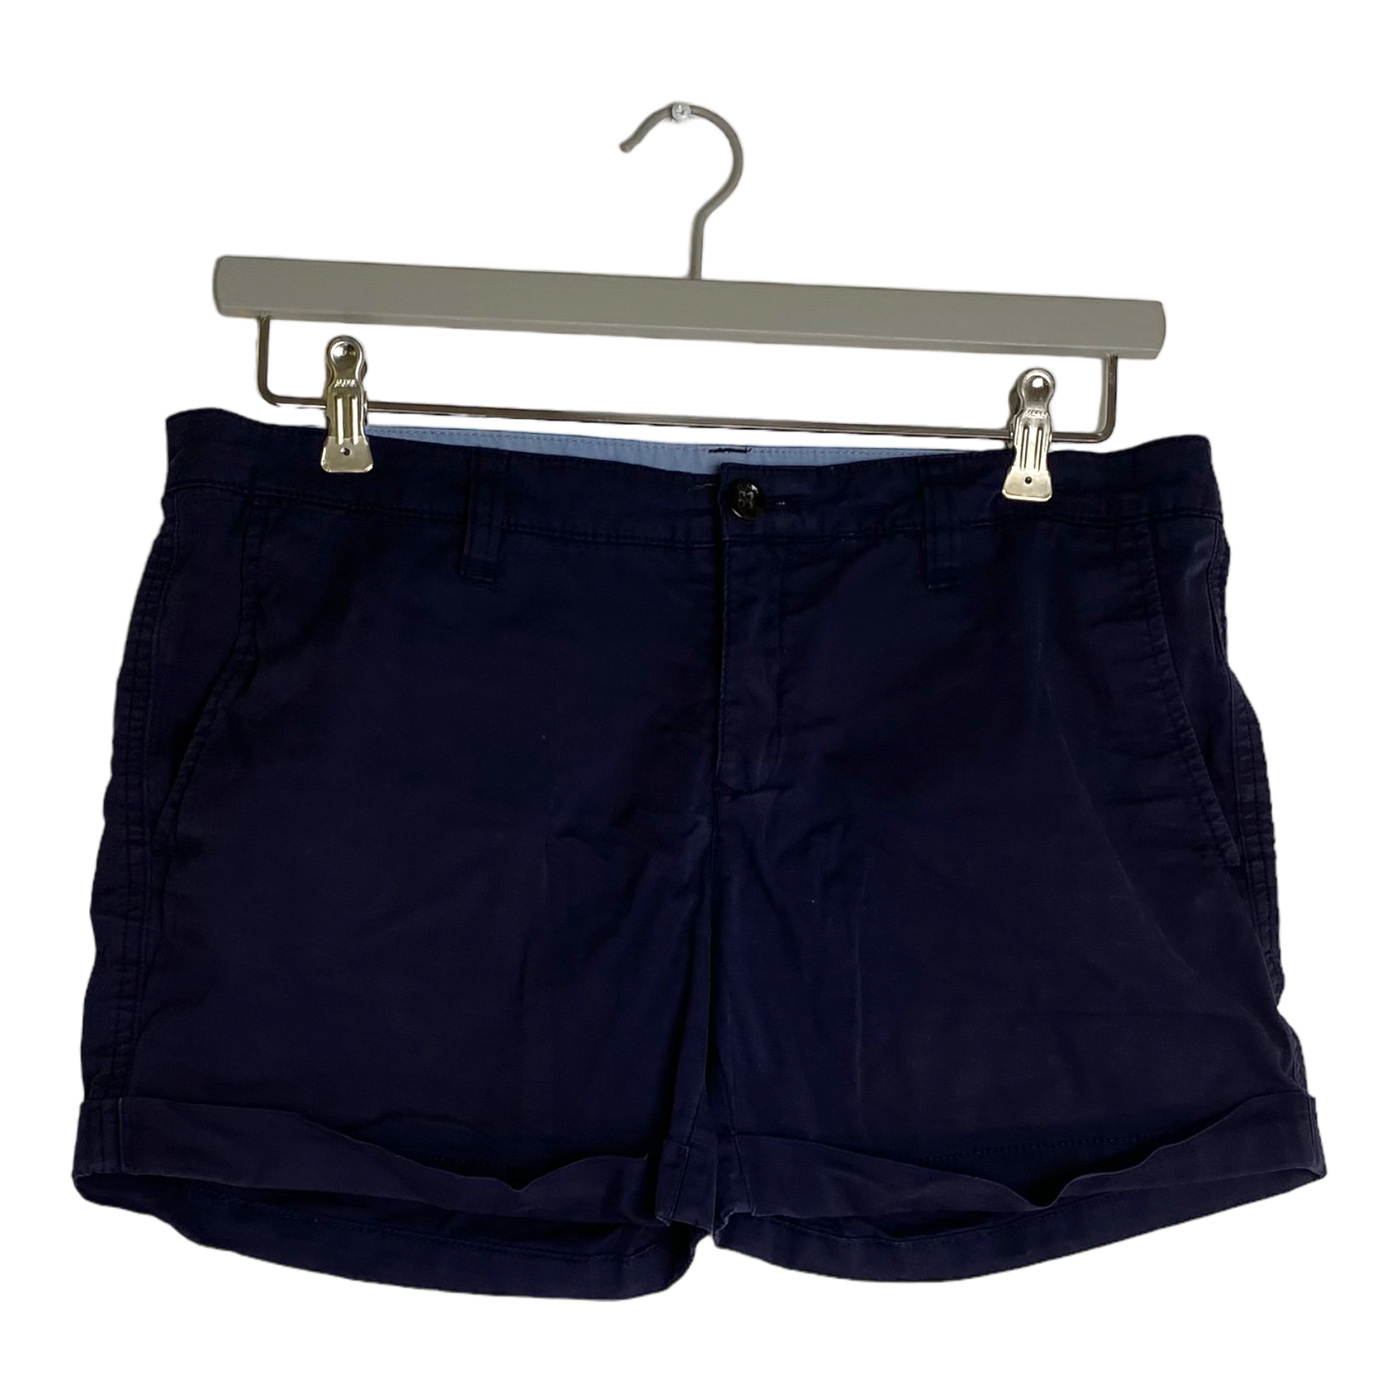 Peak Performance roslyn shorts, midnight blue | woman 30 inches